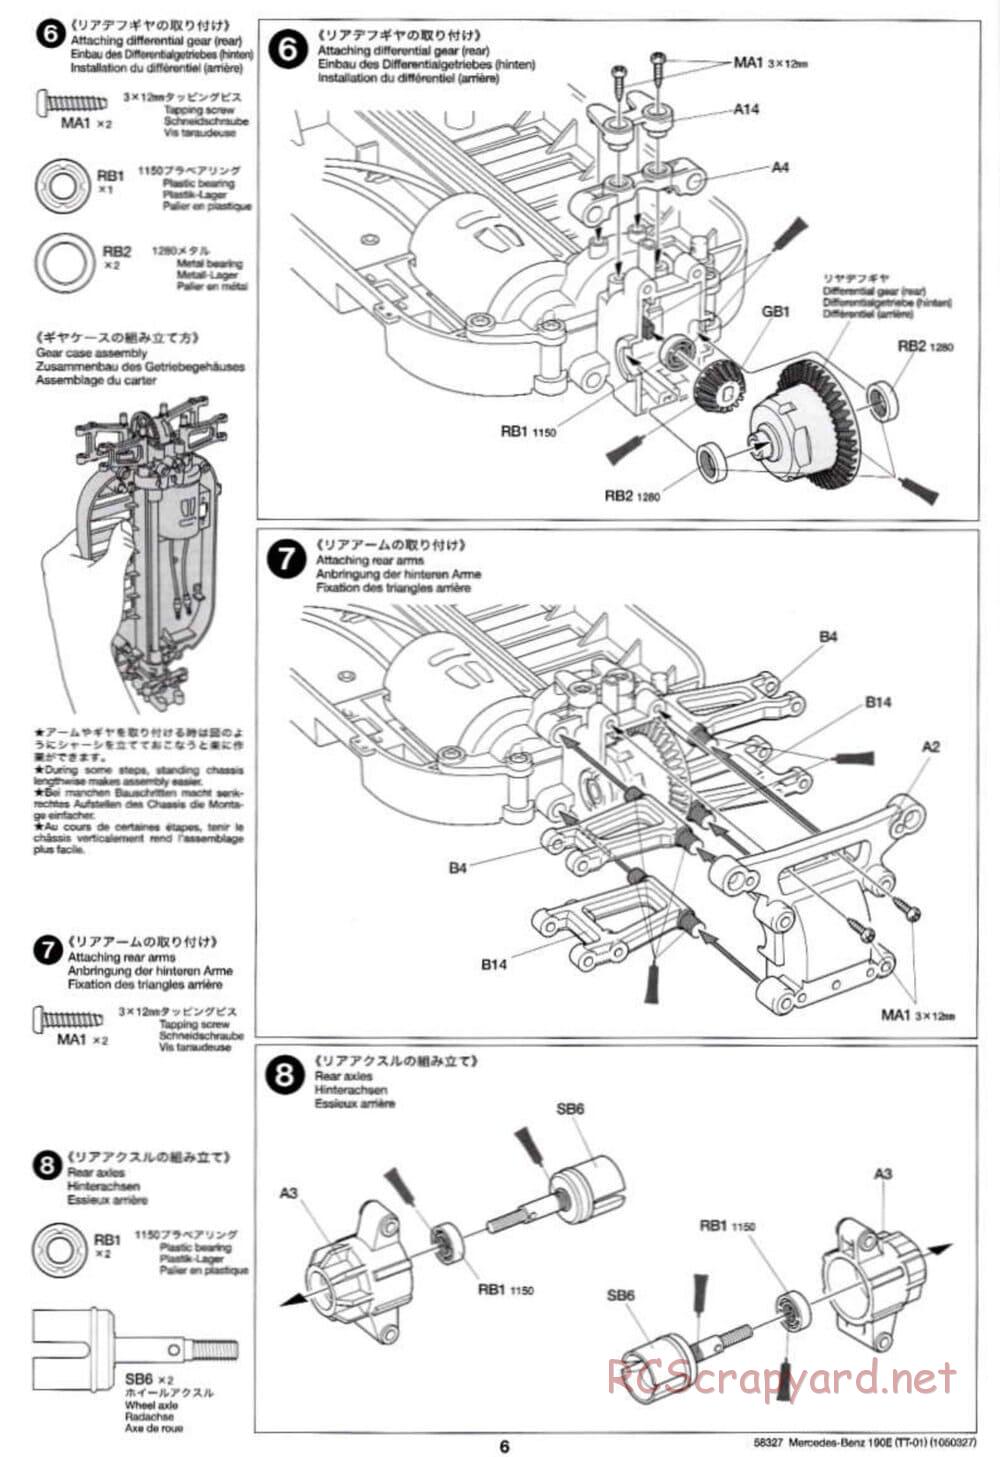 Tamiya - Mercedes Benz 190E Evo.II AMG - TT-01 Chassis - Manual - Page 6